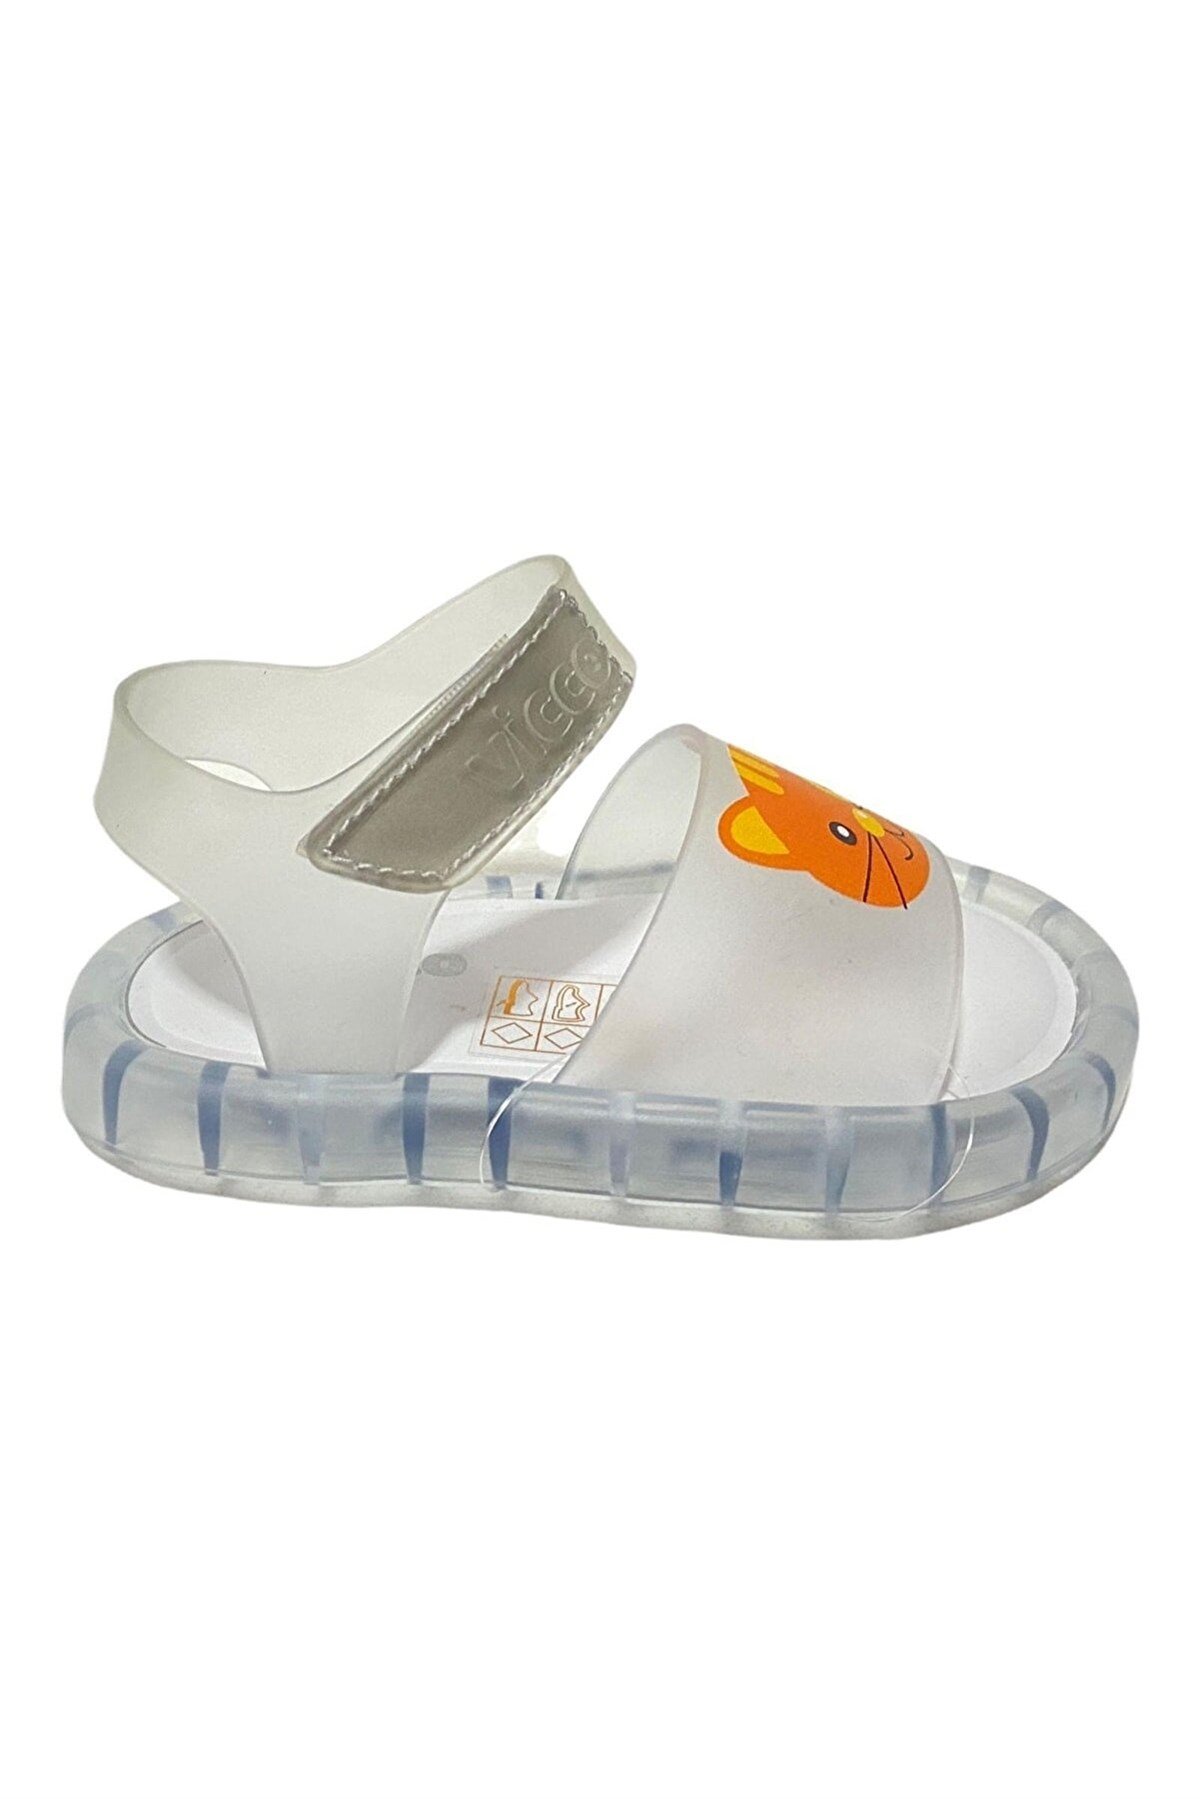 vicco jelly bebe ışıklı sandalet 321.b22y.210-12 l Agsmodasi